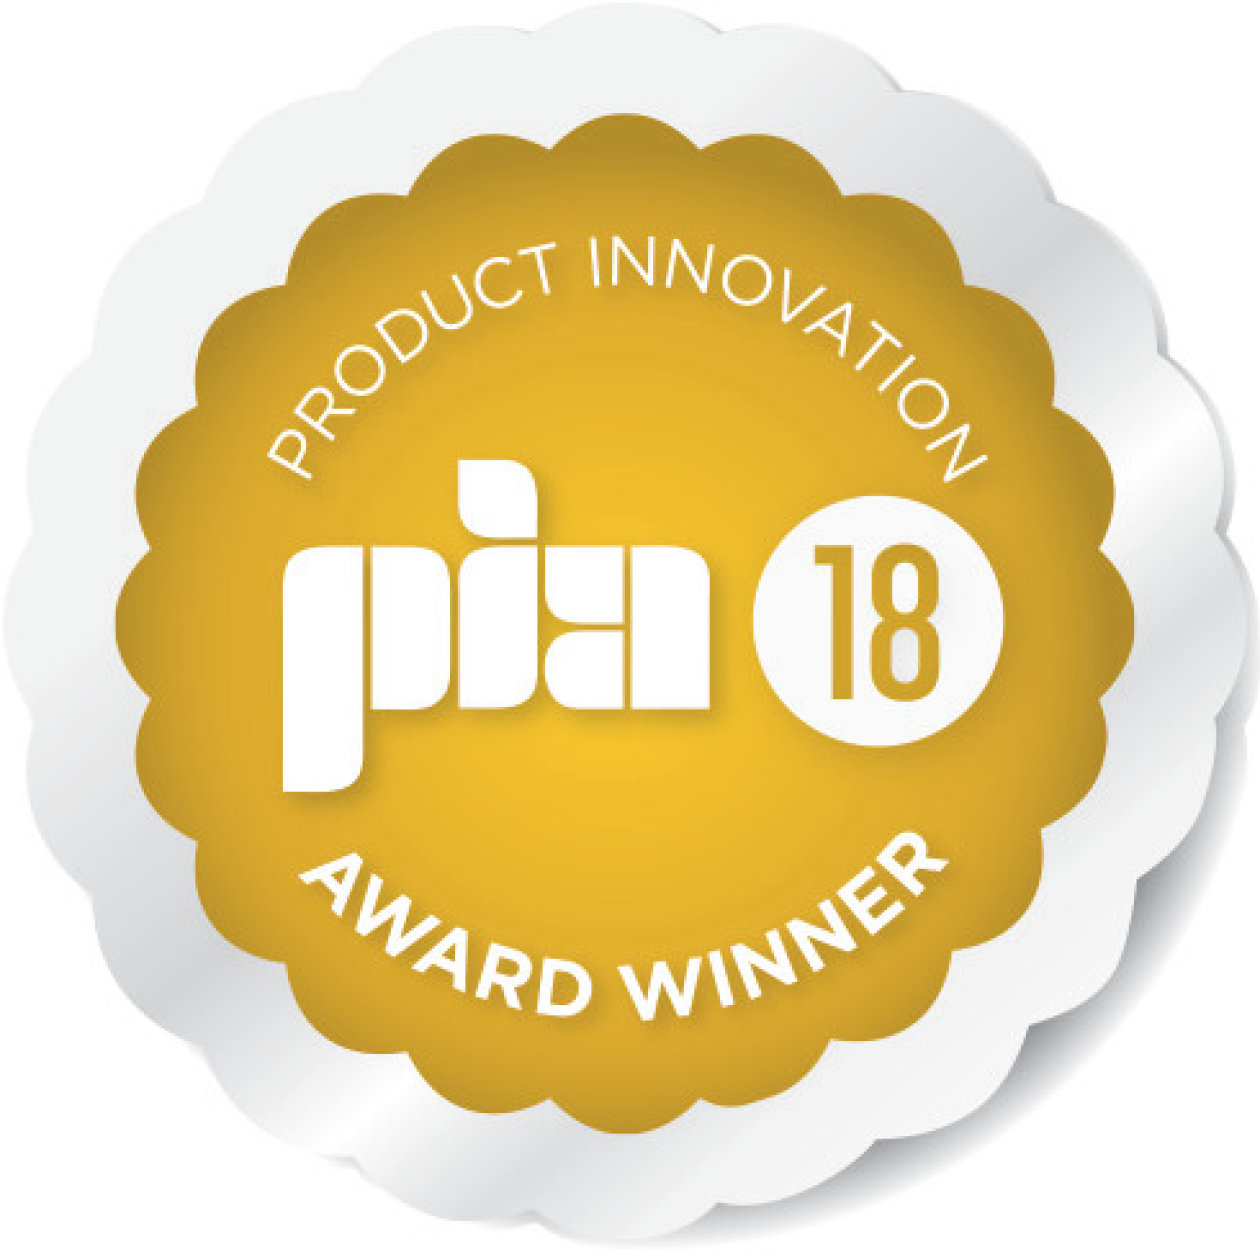 PIA 18 award winner